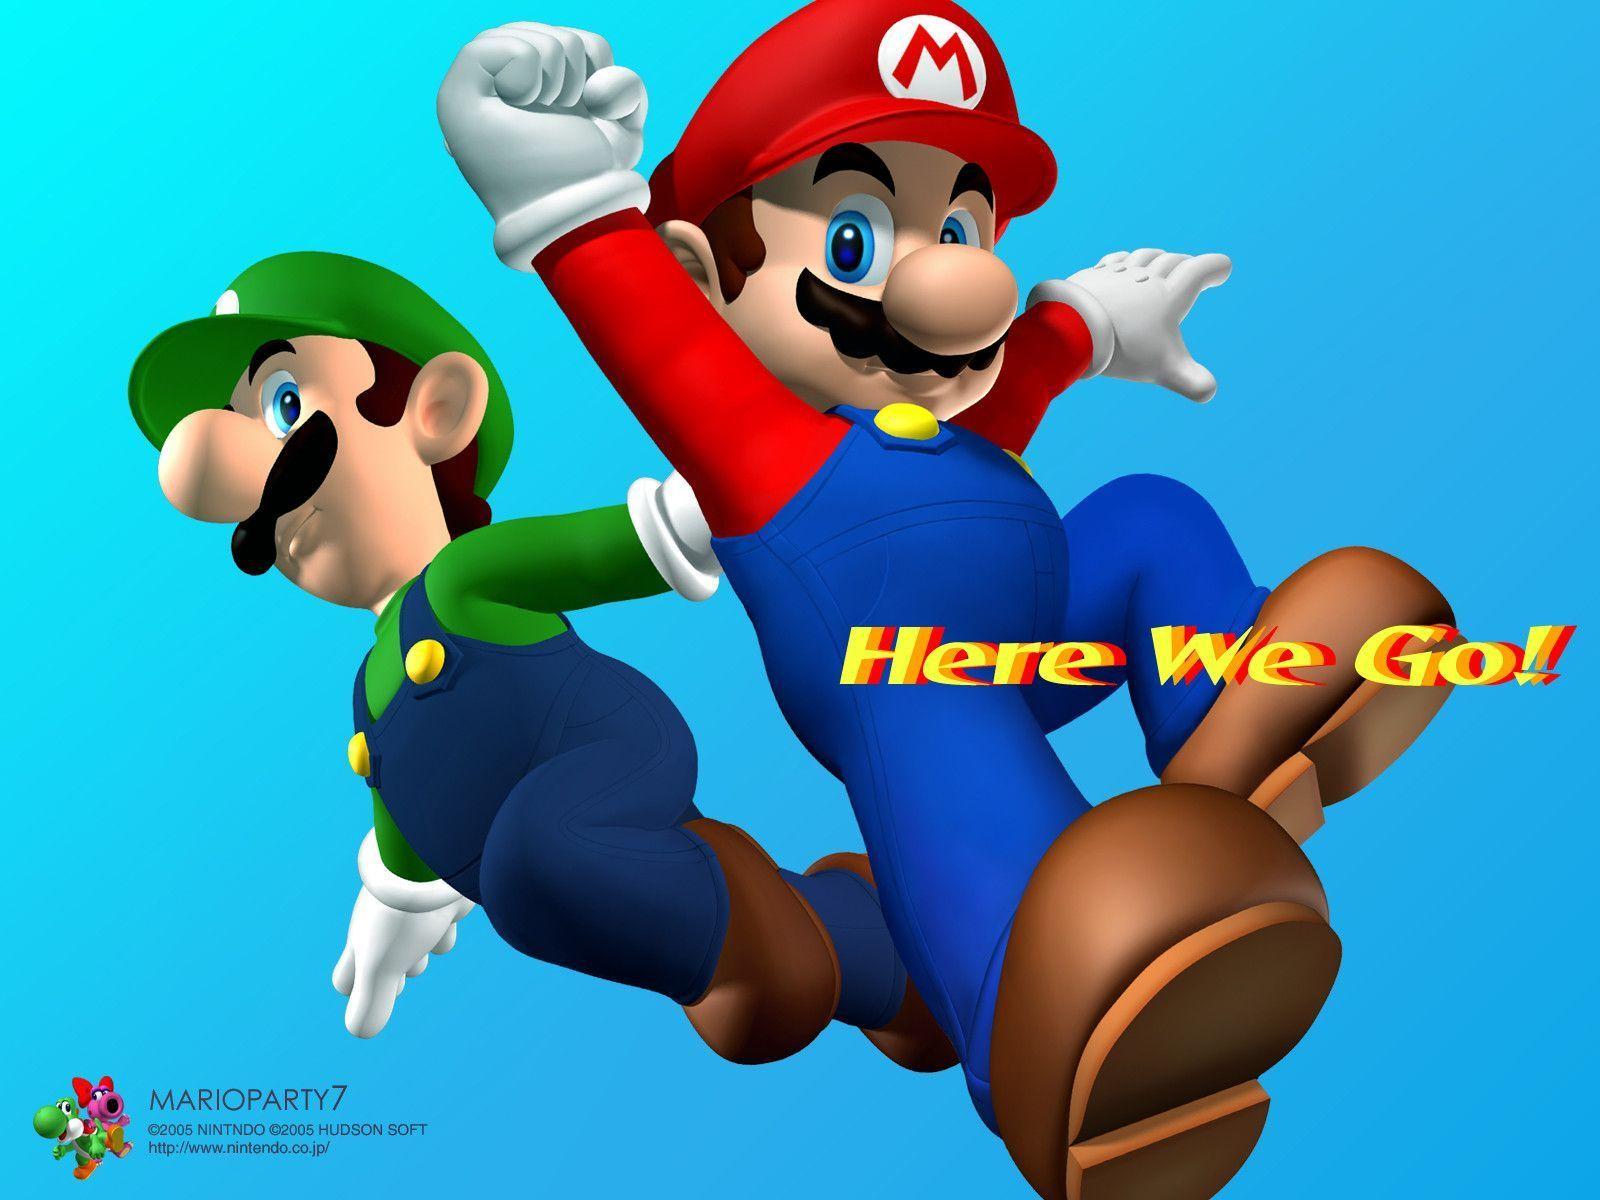 TMK. Downloads. Image. Wallpaper. Mario Party 7